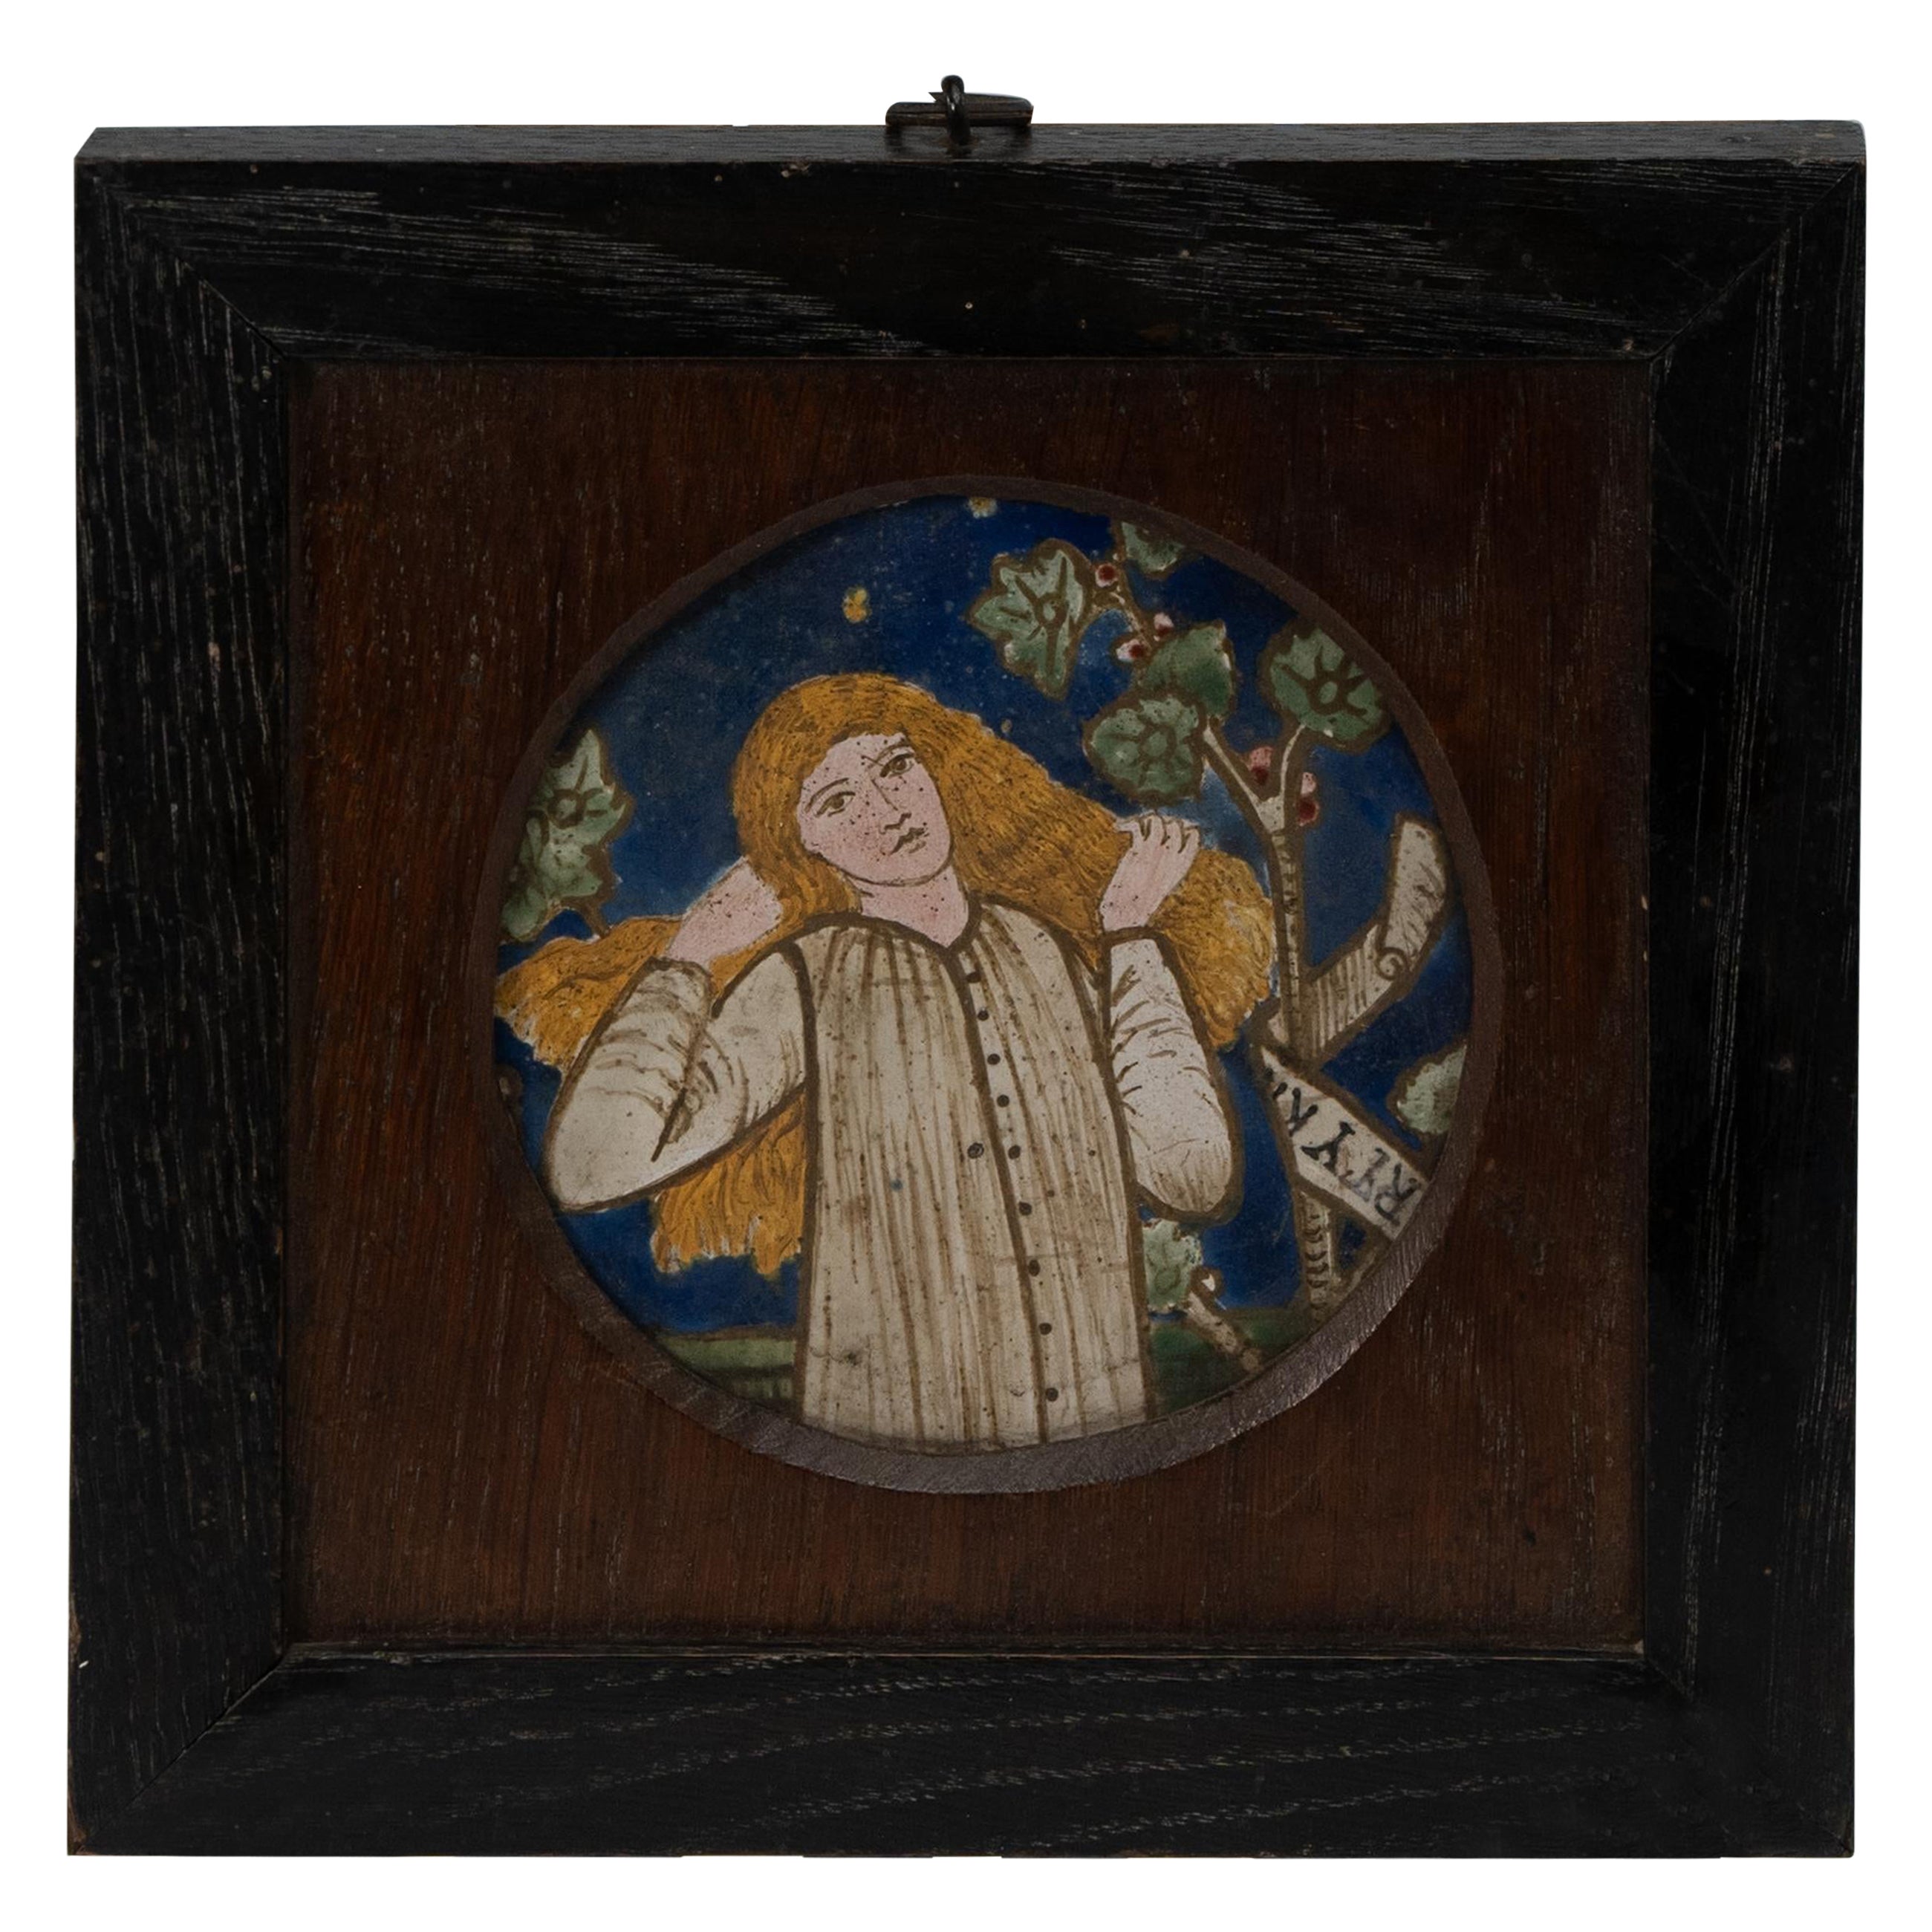 Burne Jones for Morris & Co Hand painted tile of Chaucer's legend of good wimmen For Sale